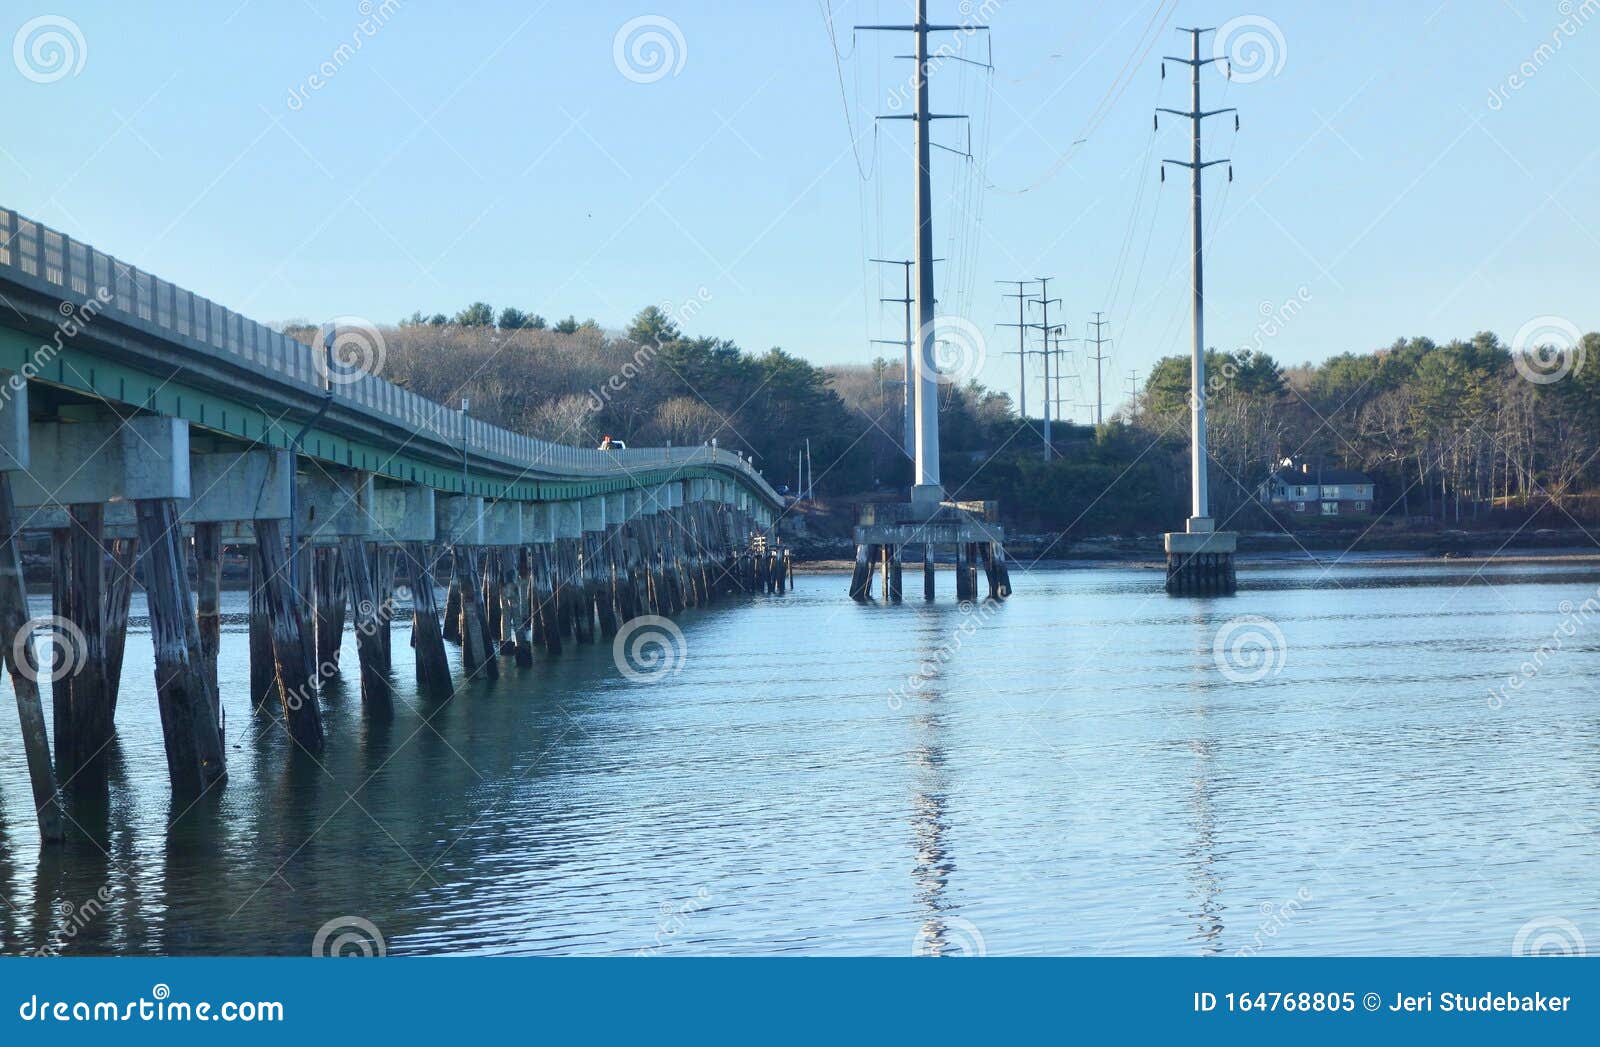 bridge from cousins island, yarmouth, maine, november 23, 2019